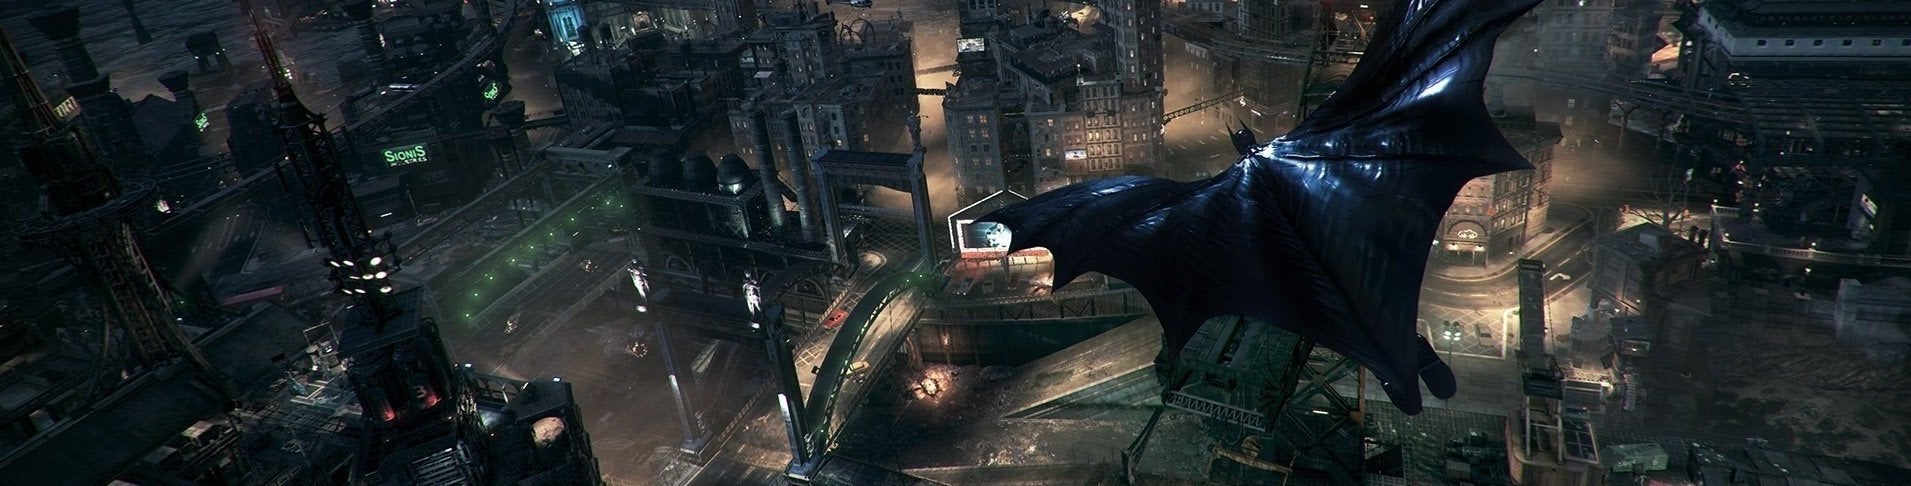 Imagem para Análise à perfomance: Batman ainda desanima no PC